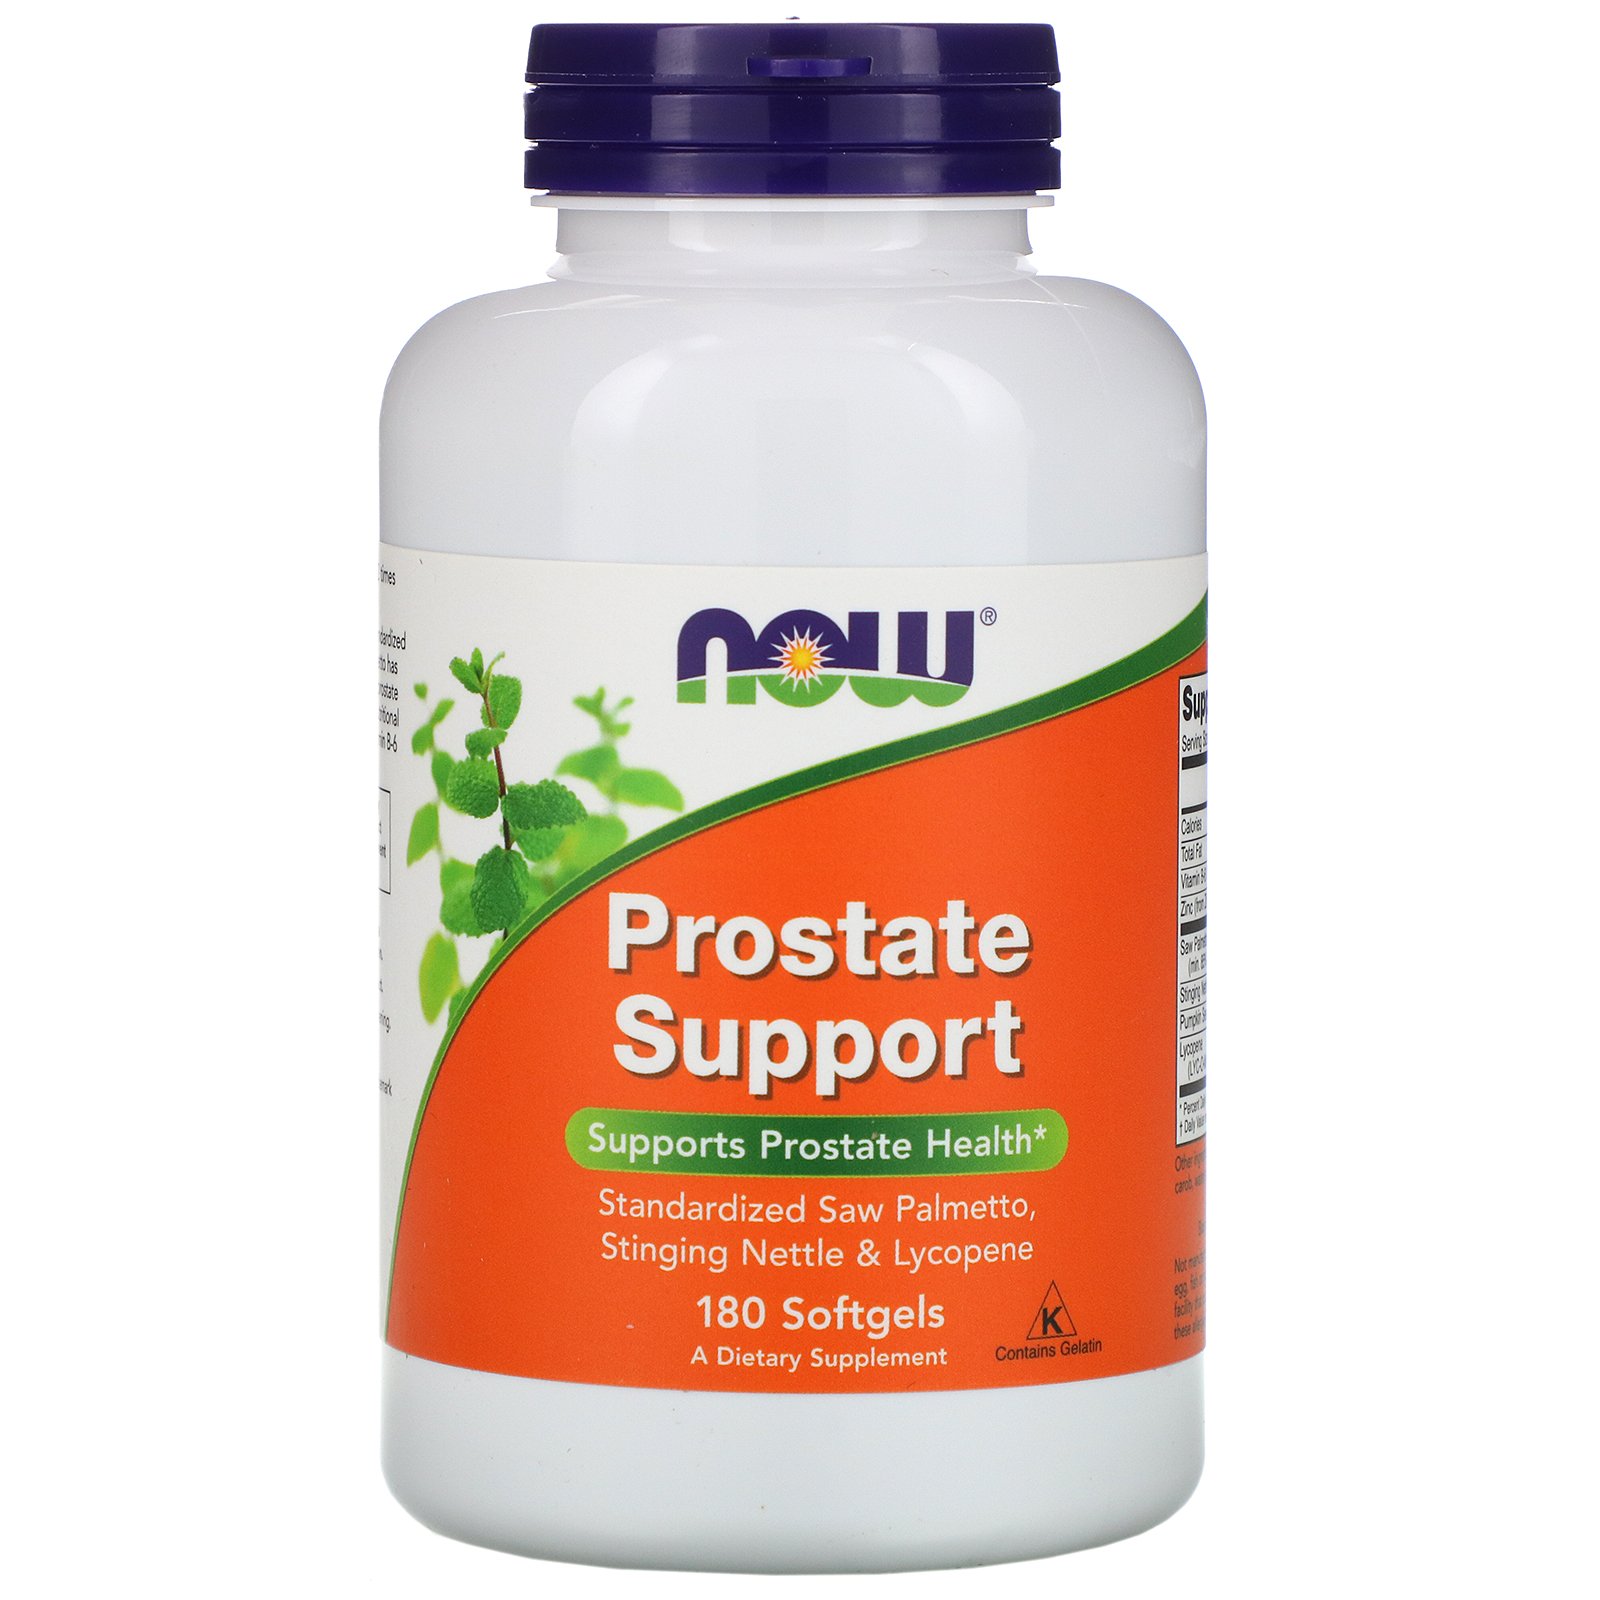 Prostate Support, Поддержка Предстательной Железы - 180 желатиновых капсул